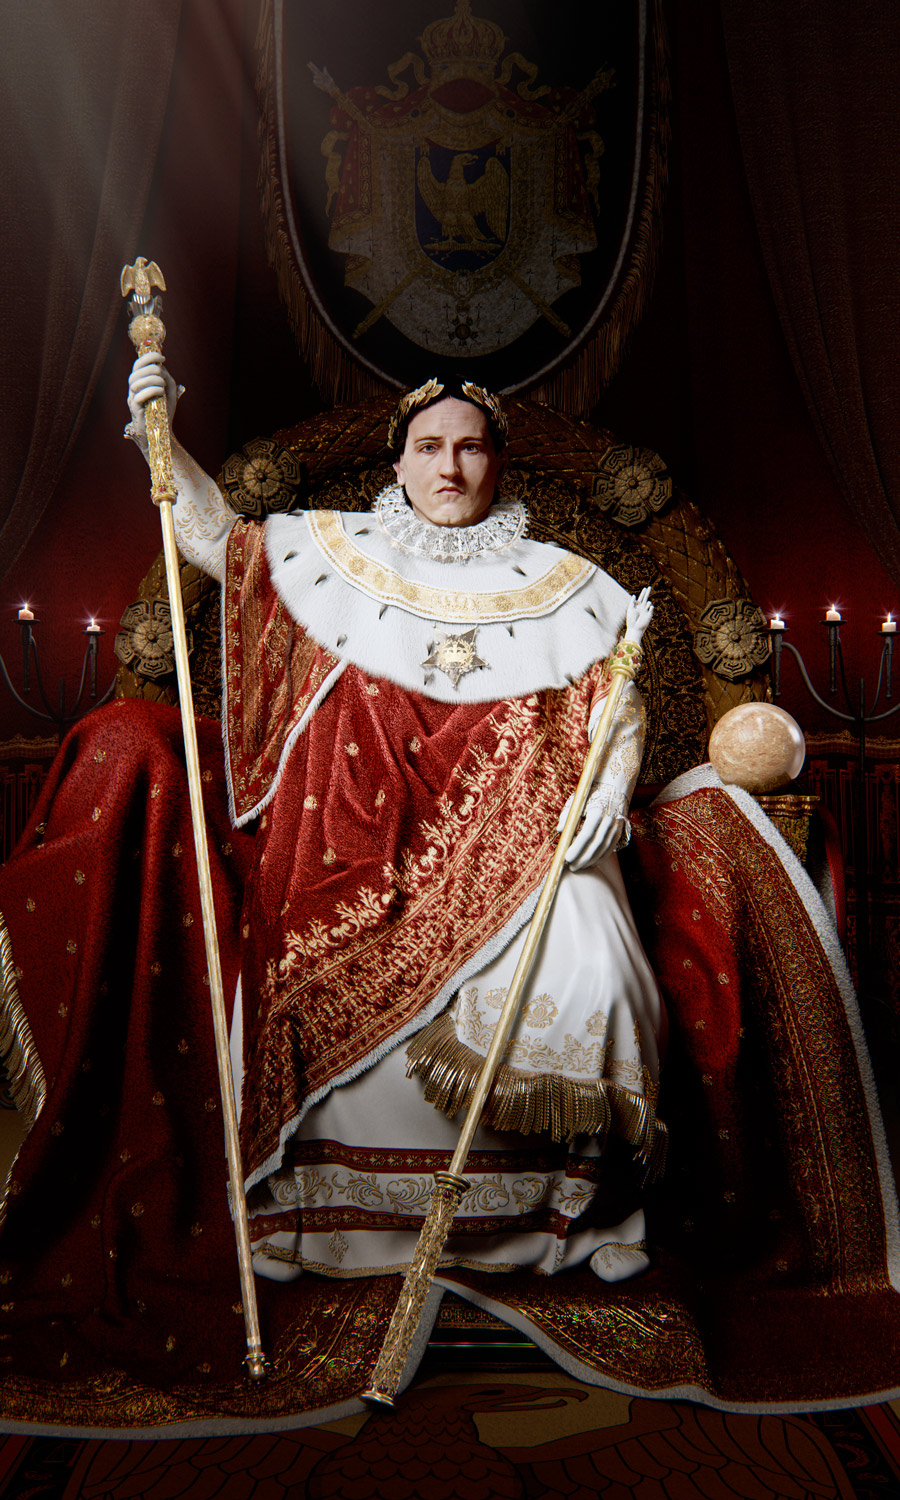 Король на троне. Наполеон Бонапарт на троне. Энгр Наполеон. Жан-Огюст-Доминик Энгр Наполеон на императорском троне. Энгр портрет Наполеона на императорском троне.